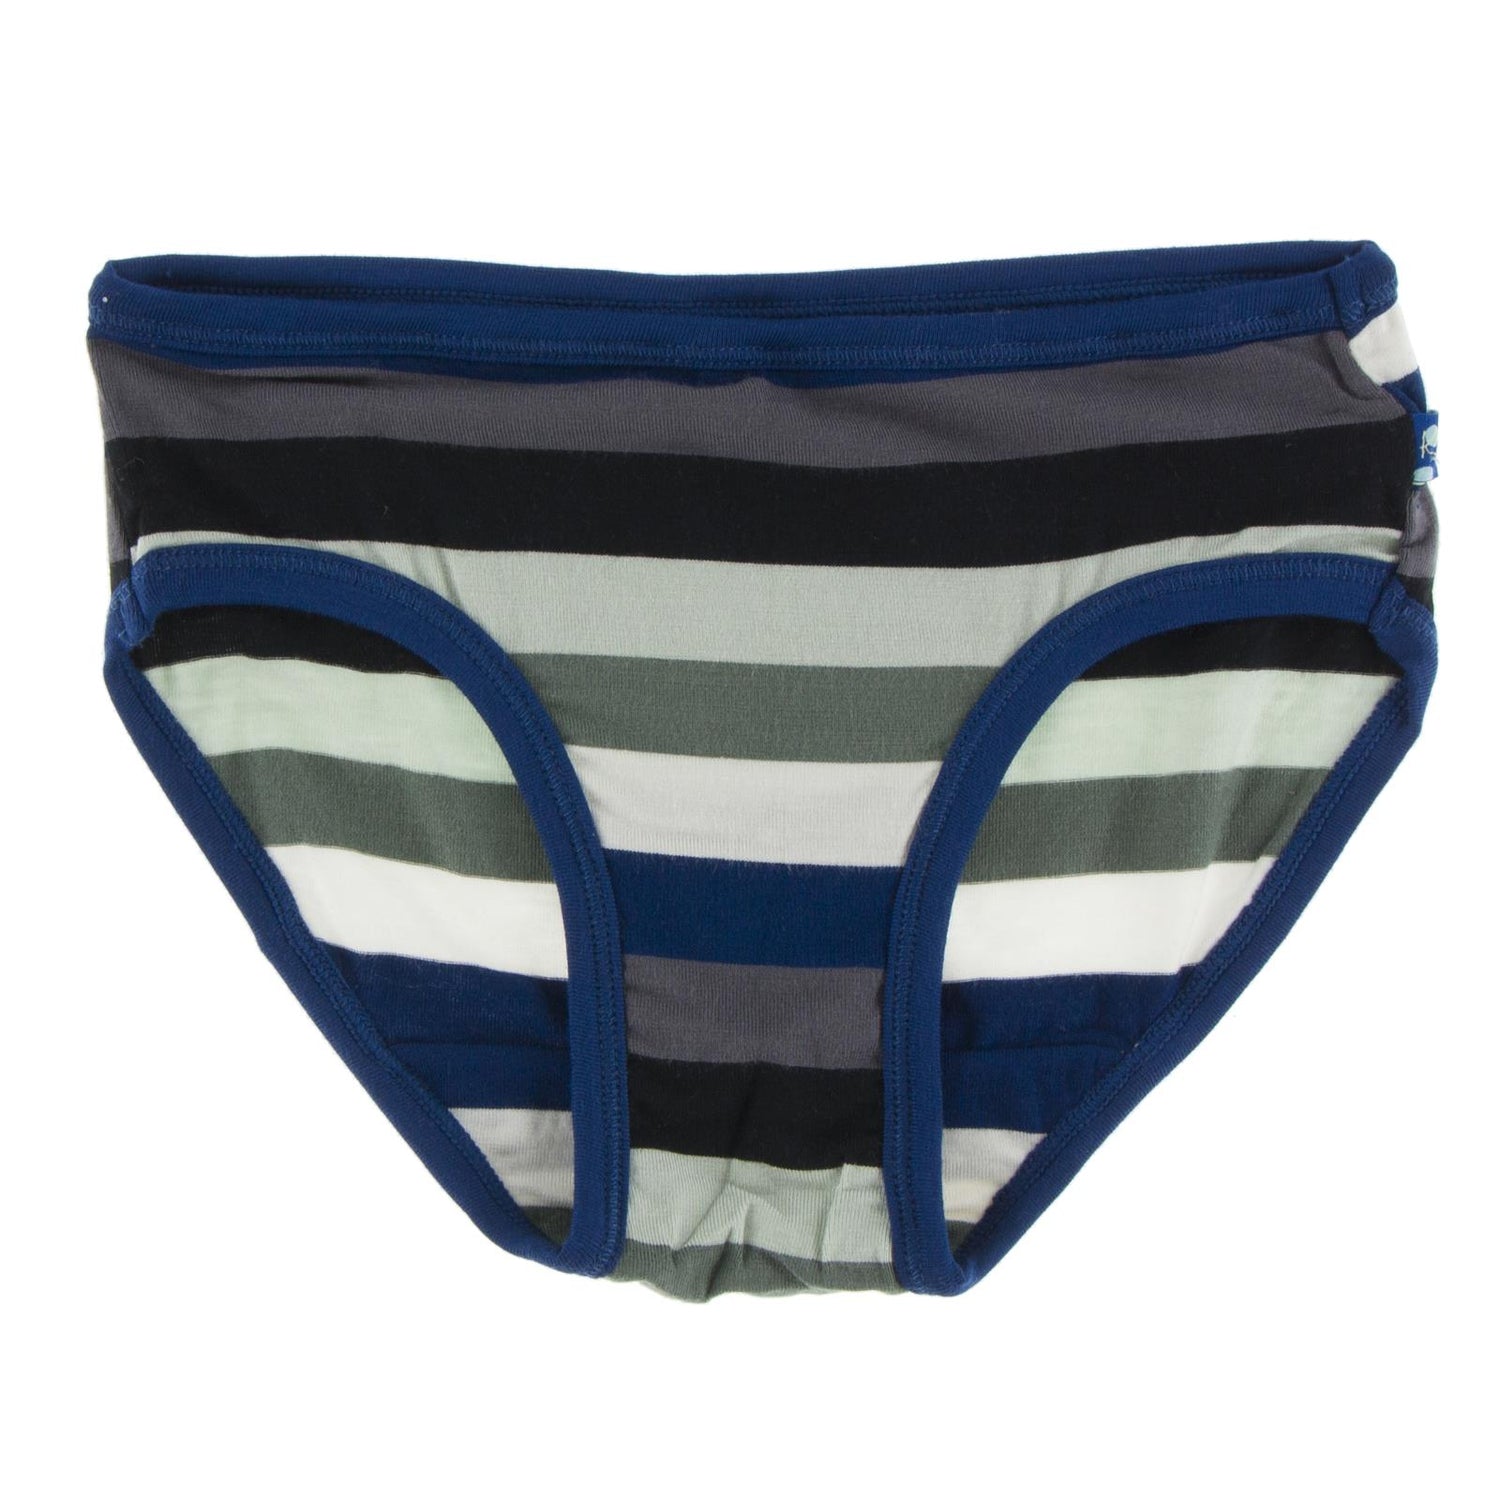 Print Underwear in Zoology Stripe with Flag Blue Trim